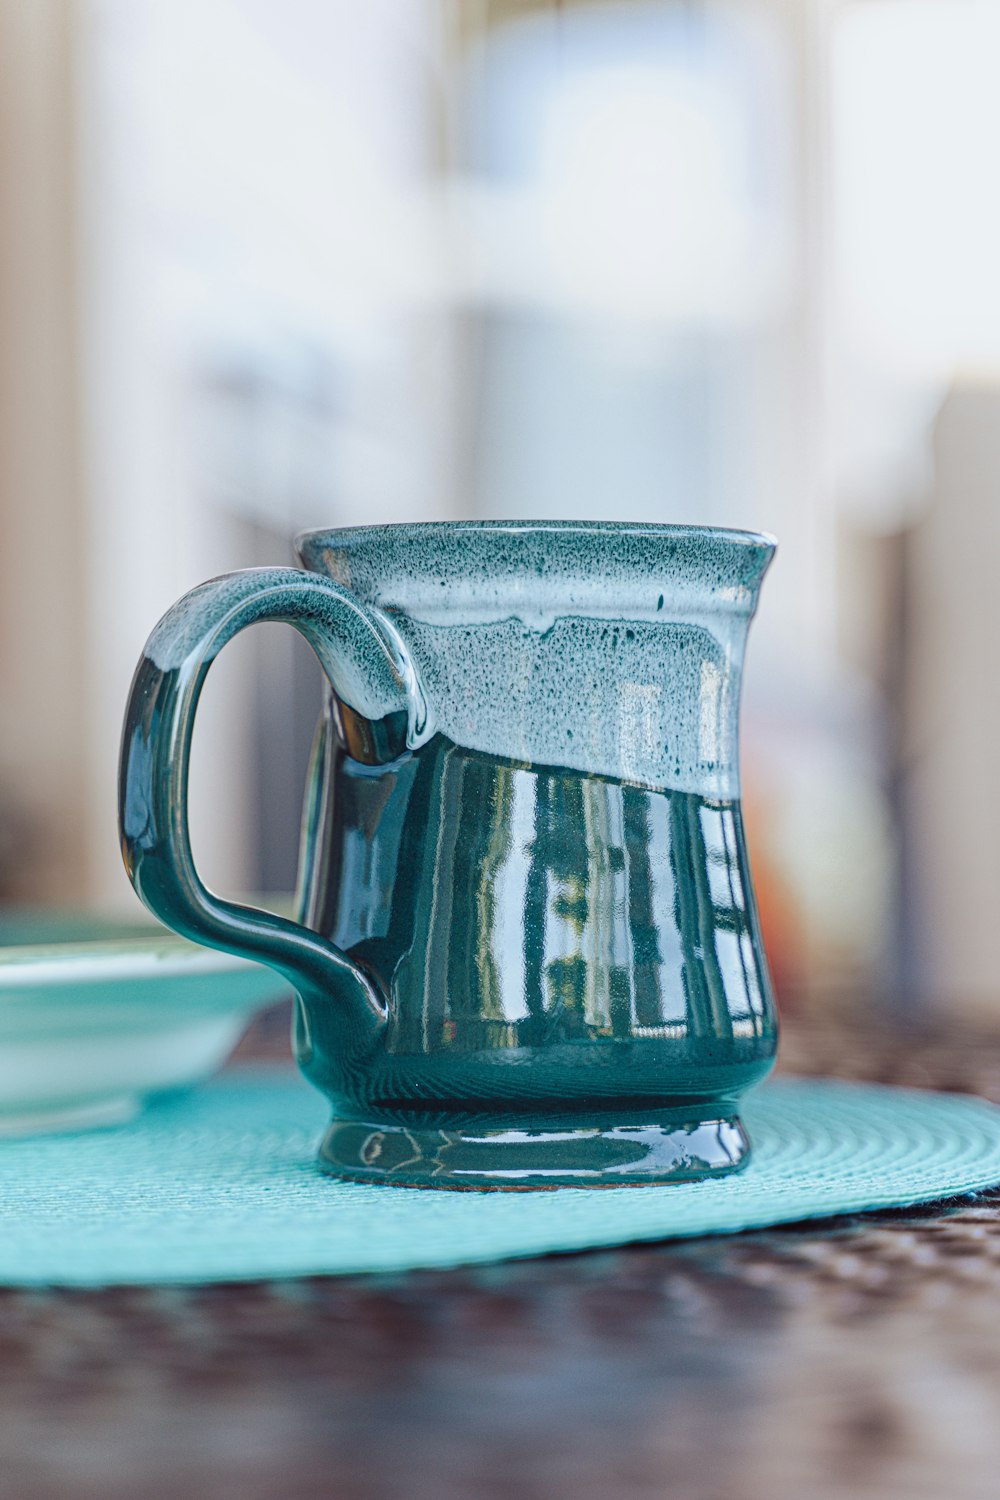 blue ceramic mug on blue table cloth